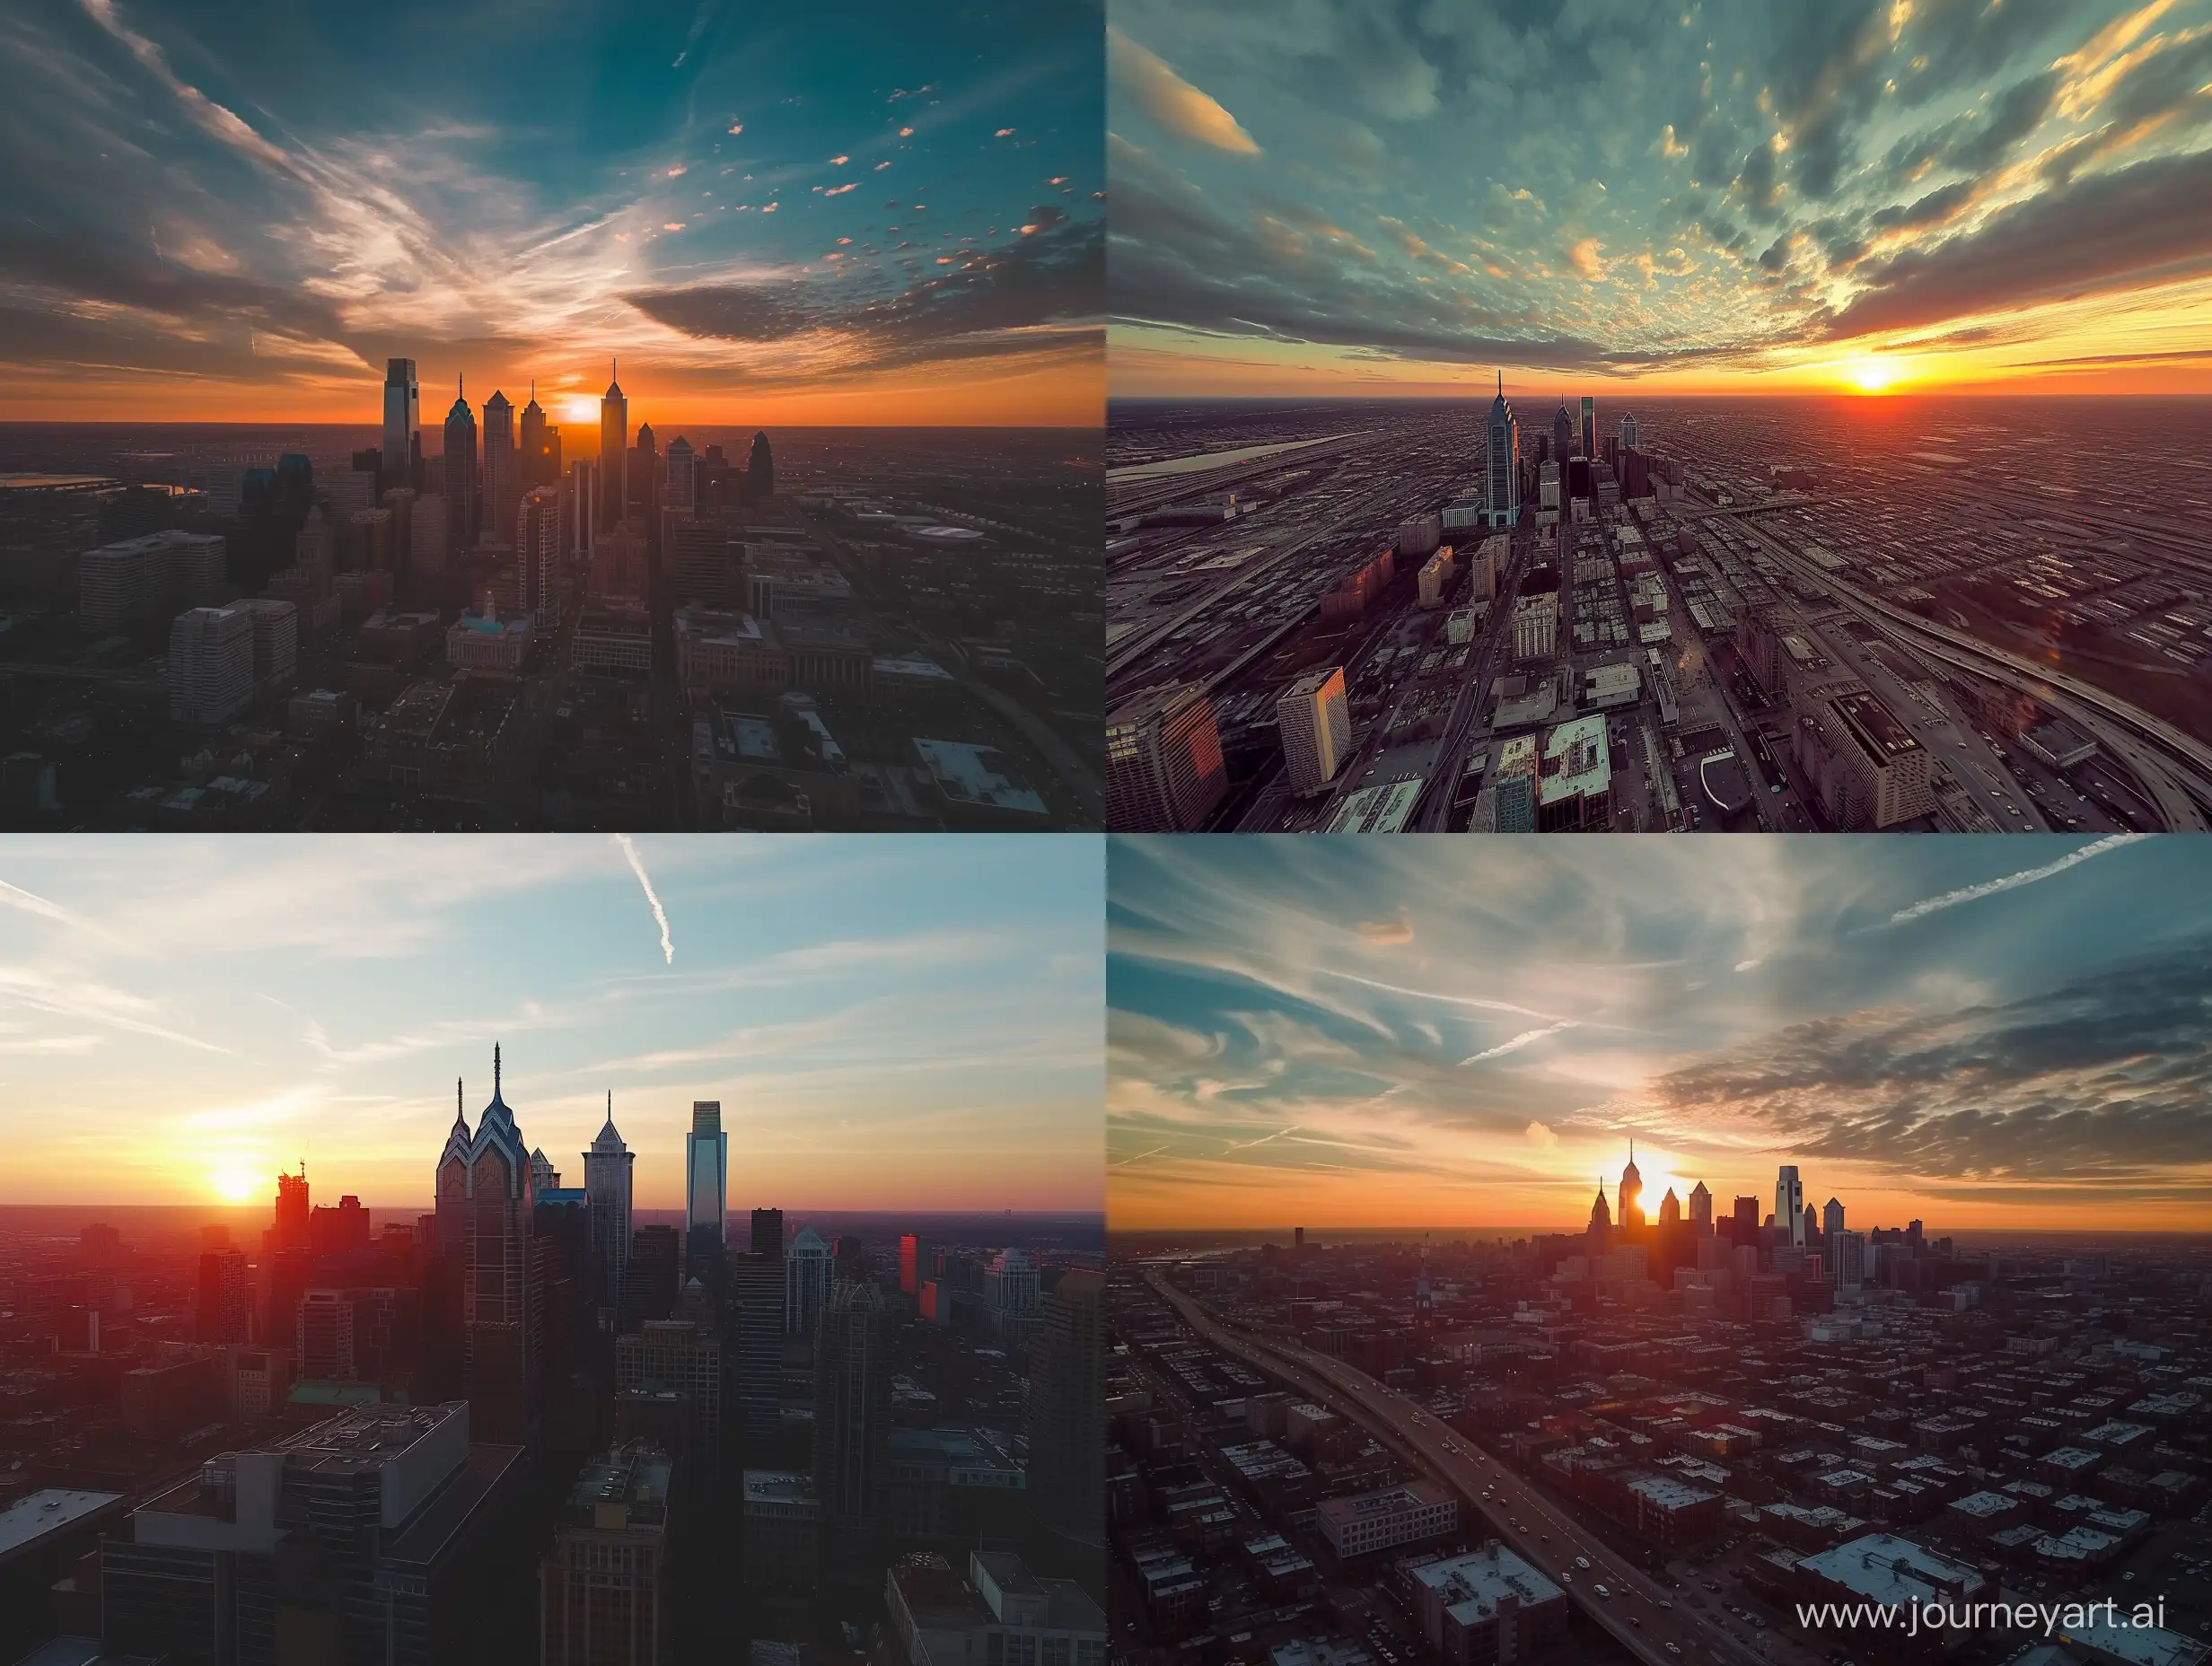 Vivid-Sunset-Over-Philadelphia-City-Breathtaking-Drone-View-of-Detailed-City-Scenes